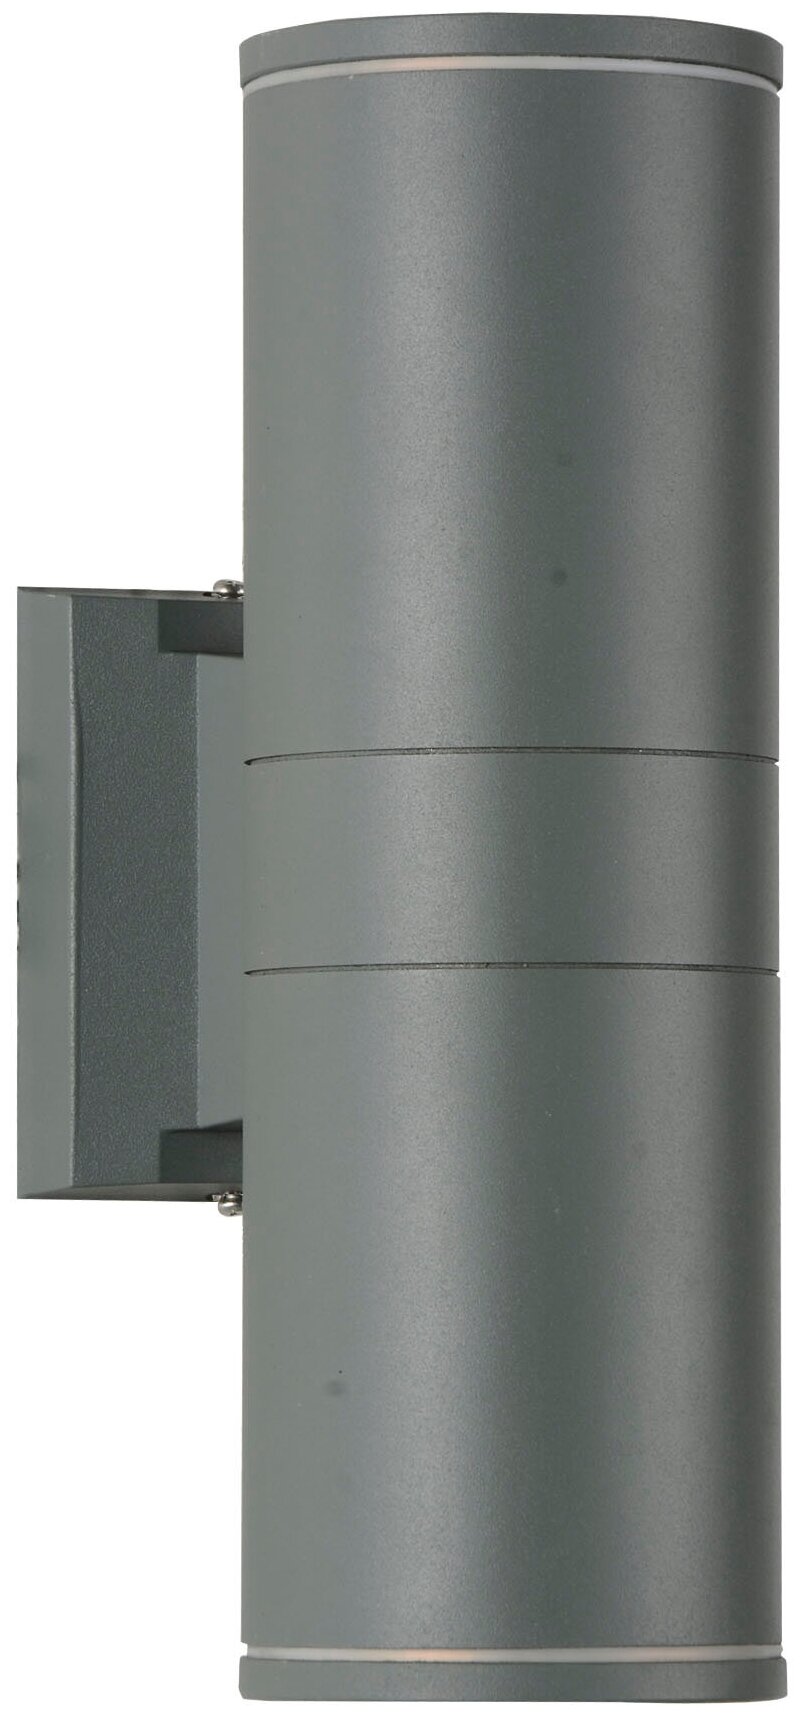 ST Luce Уличный настенный светильник Tubo SL561.701.02 светодиодный, 10 Вт, цвет арматуры: серый, цвет плафона серый